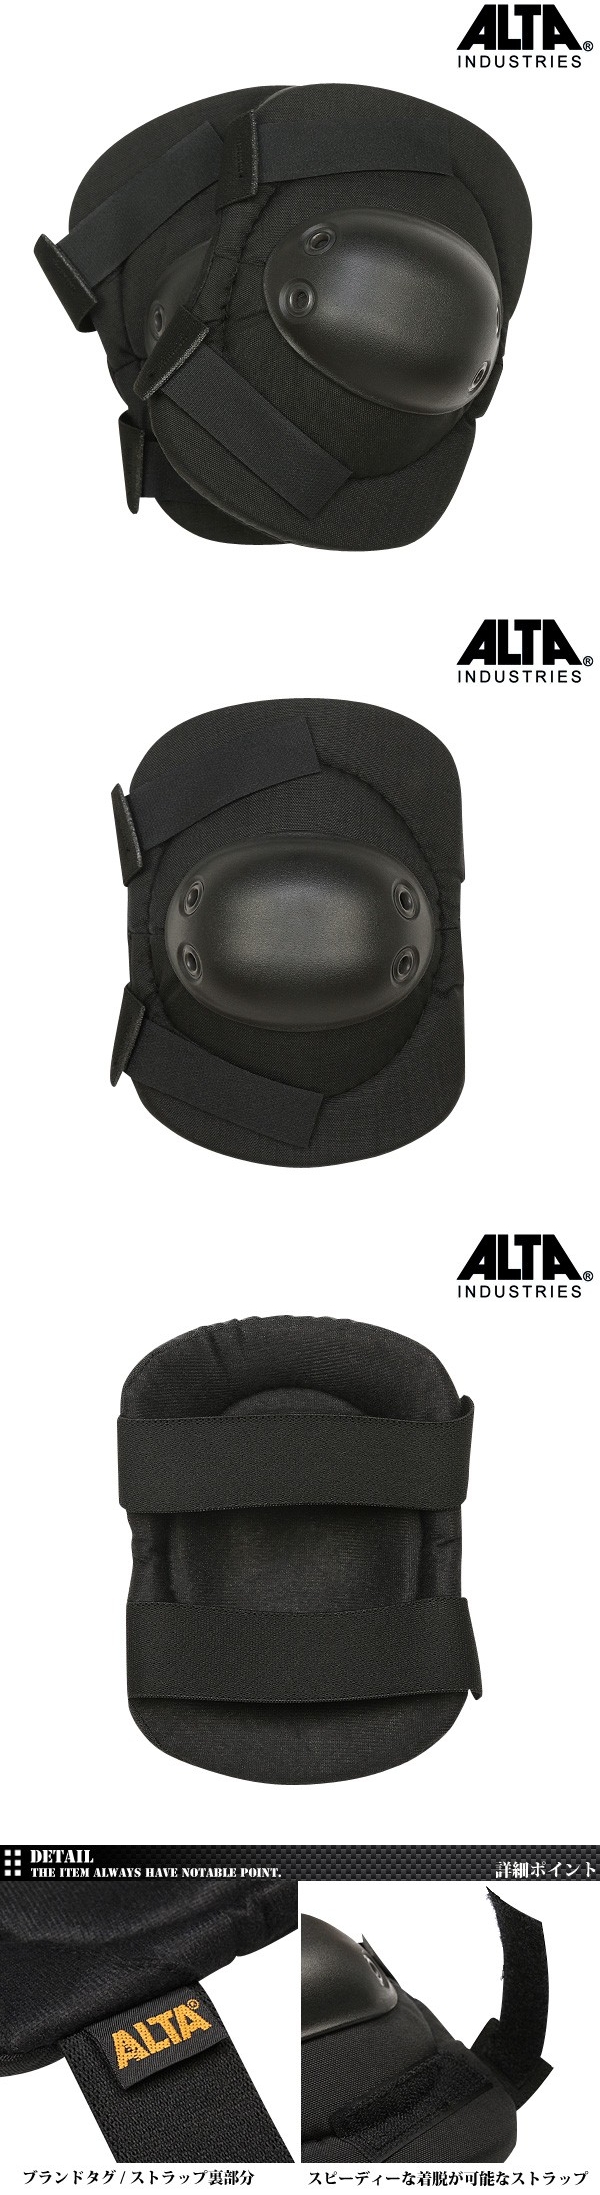 ALTA アルタ FLEX タクティカルニーパッド AltaLok BLACK米軍や法執行機関にも 採用されているプロテクトギア 保護力、装着感共に一線を画す 当店一押しのプロテクトギア メンズ メンズ ミリタリー アウトドア送料無料 春 セール sale